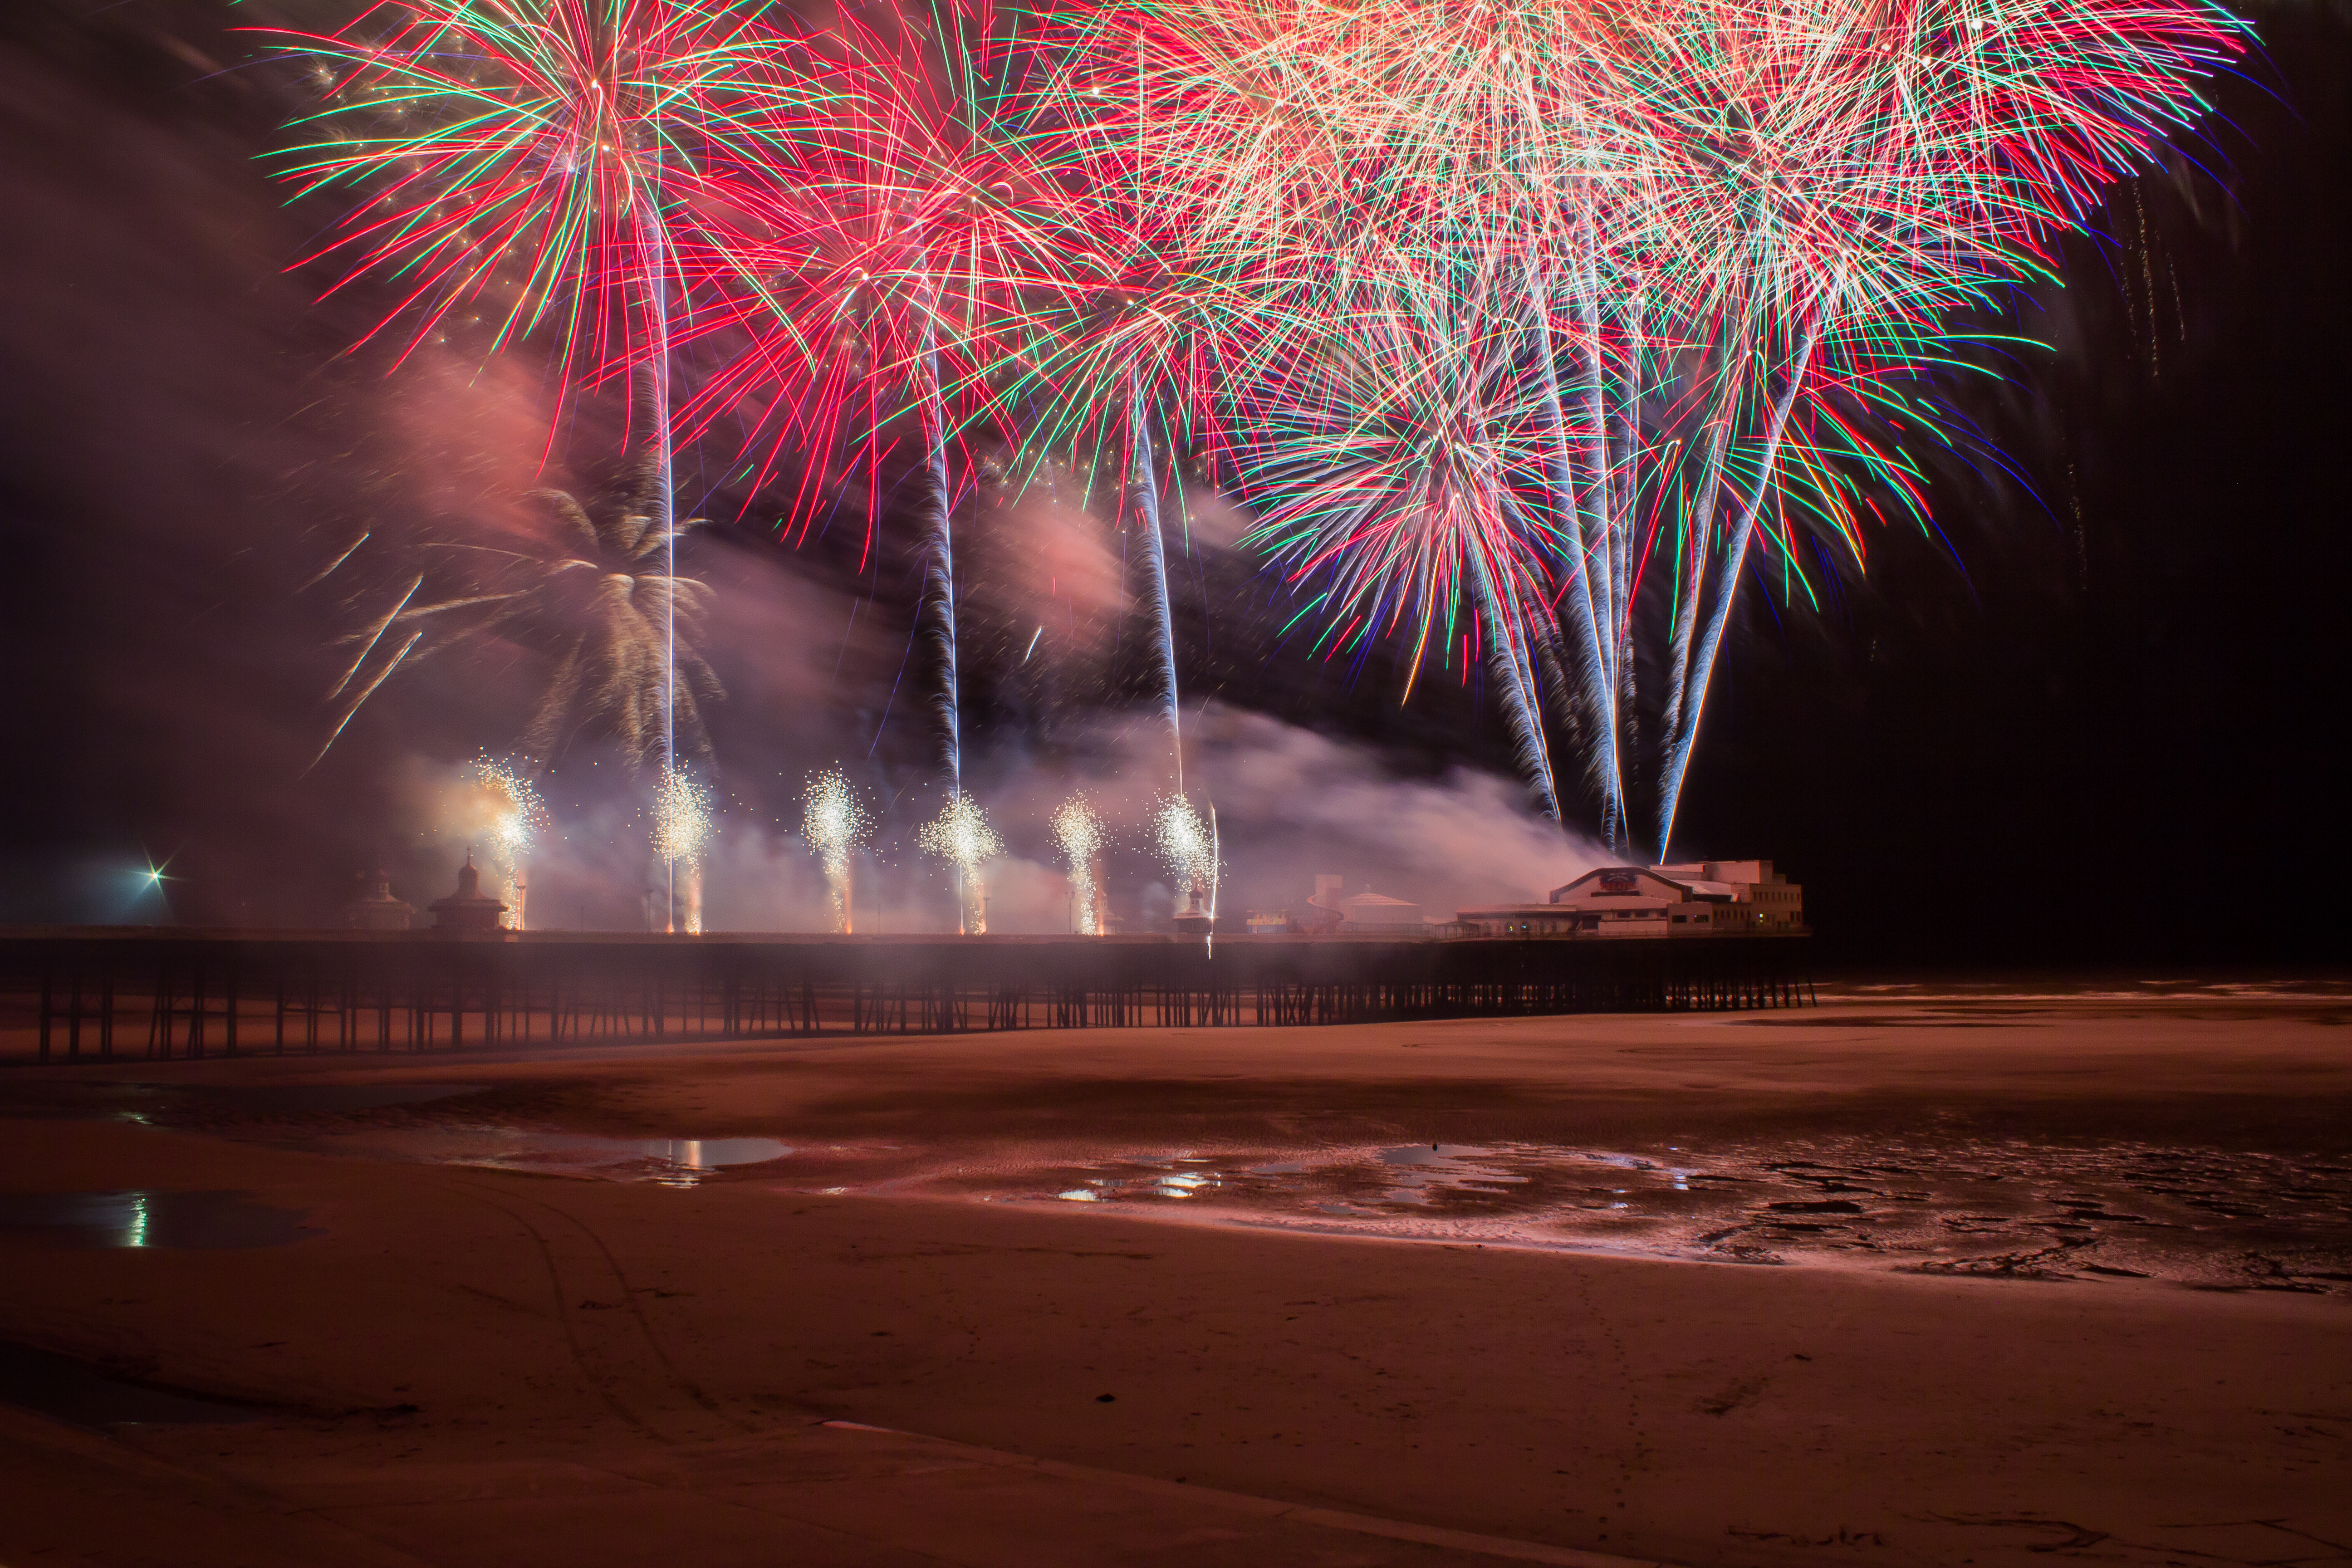 Fireworks at North Pier, photo by Ian Cramman / Shutterstock.com